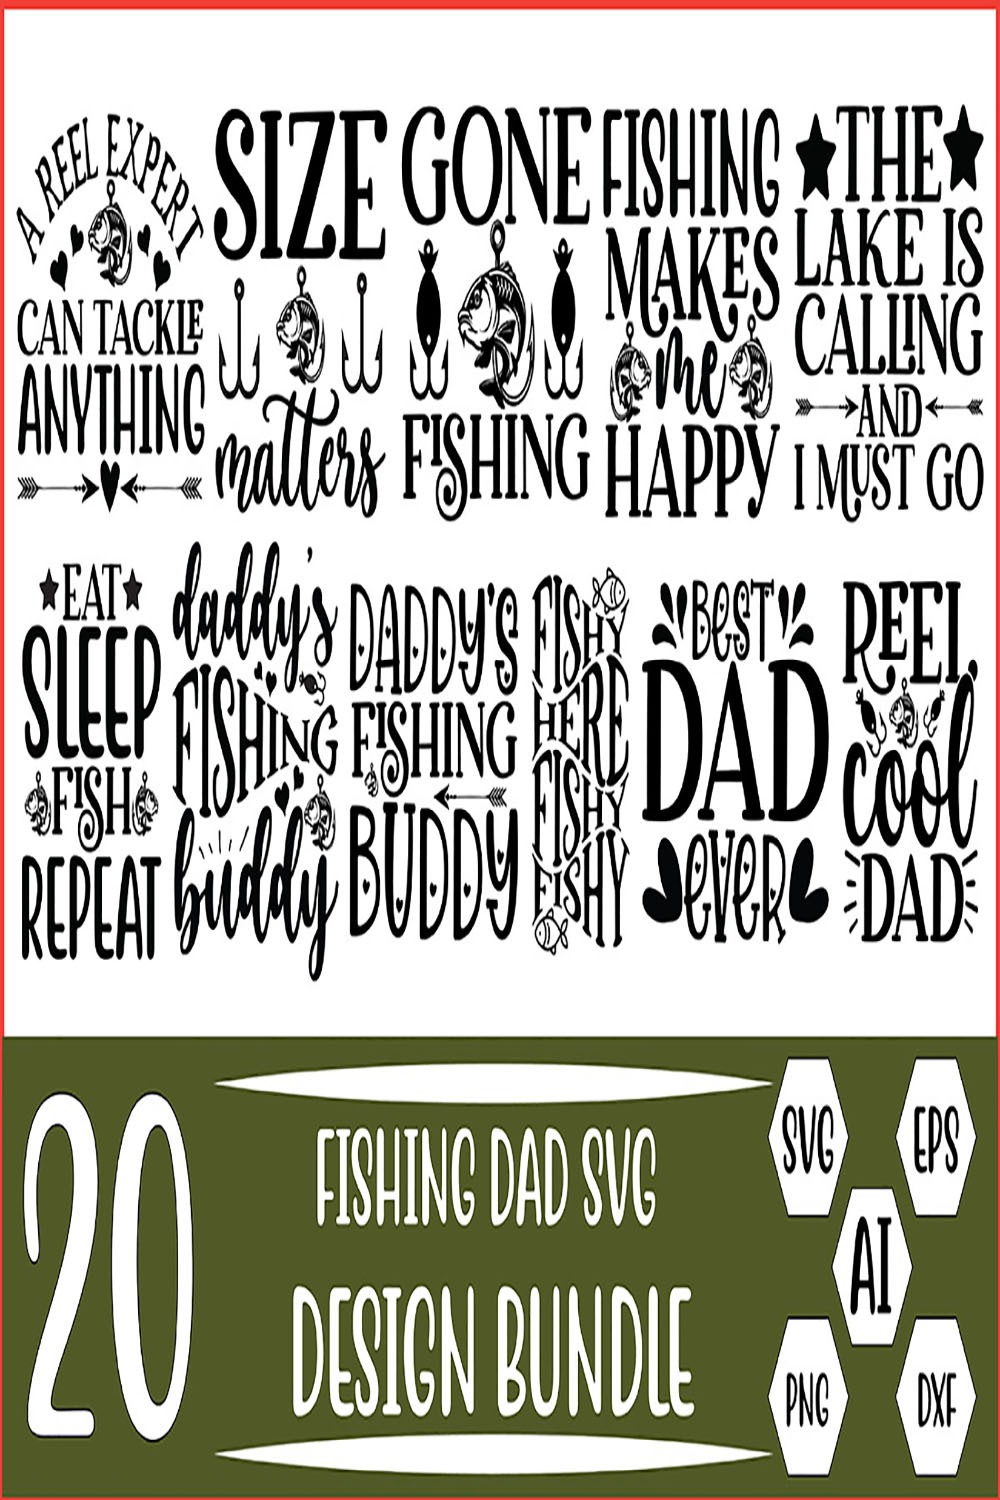 20 Fishing Dad Svg Designs Bundle Files Vector Template pinterest preview image.